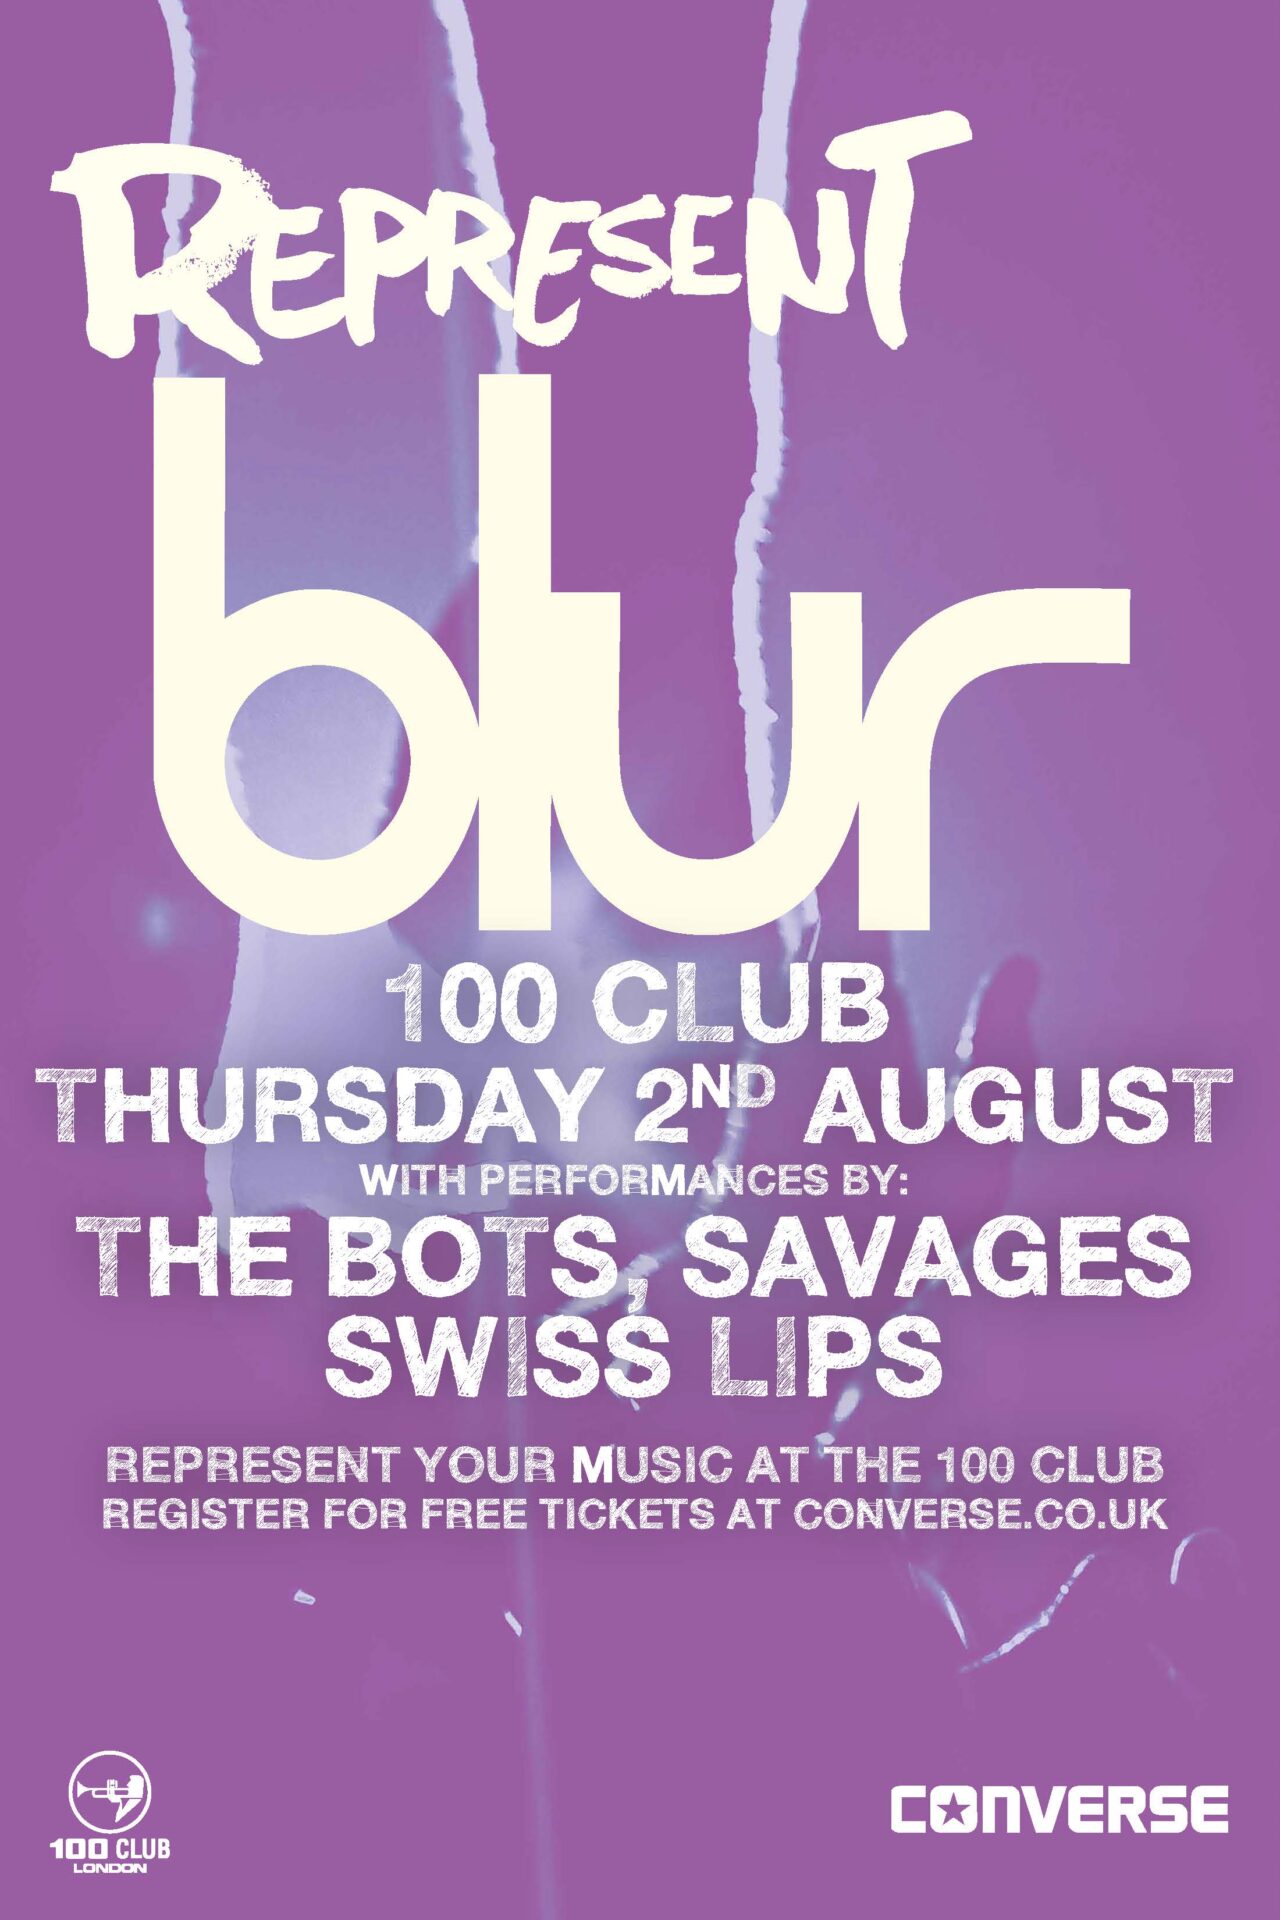 Blur to headline Converse Represent at 100 Club